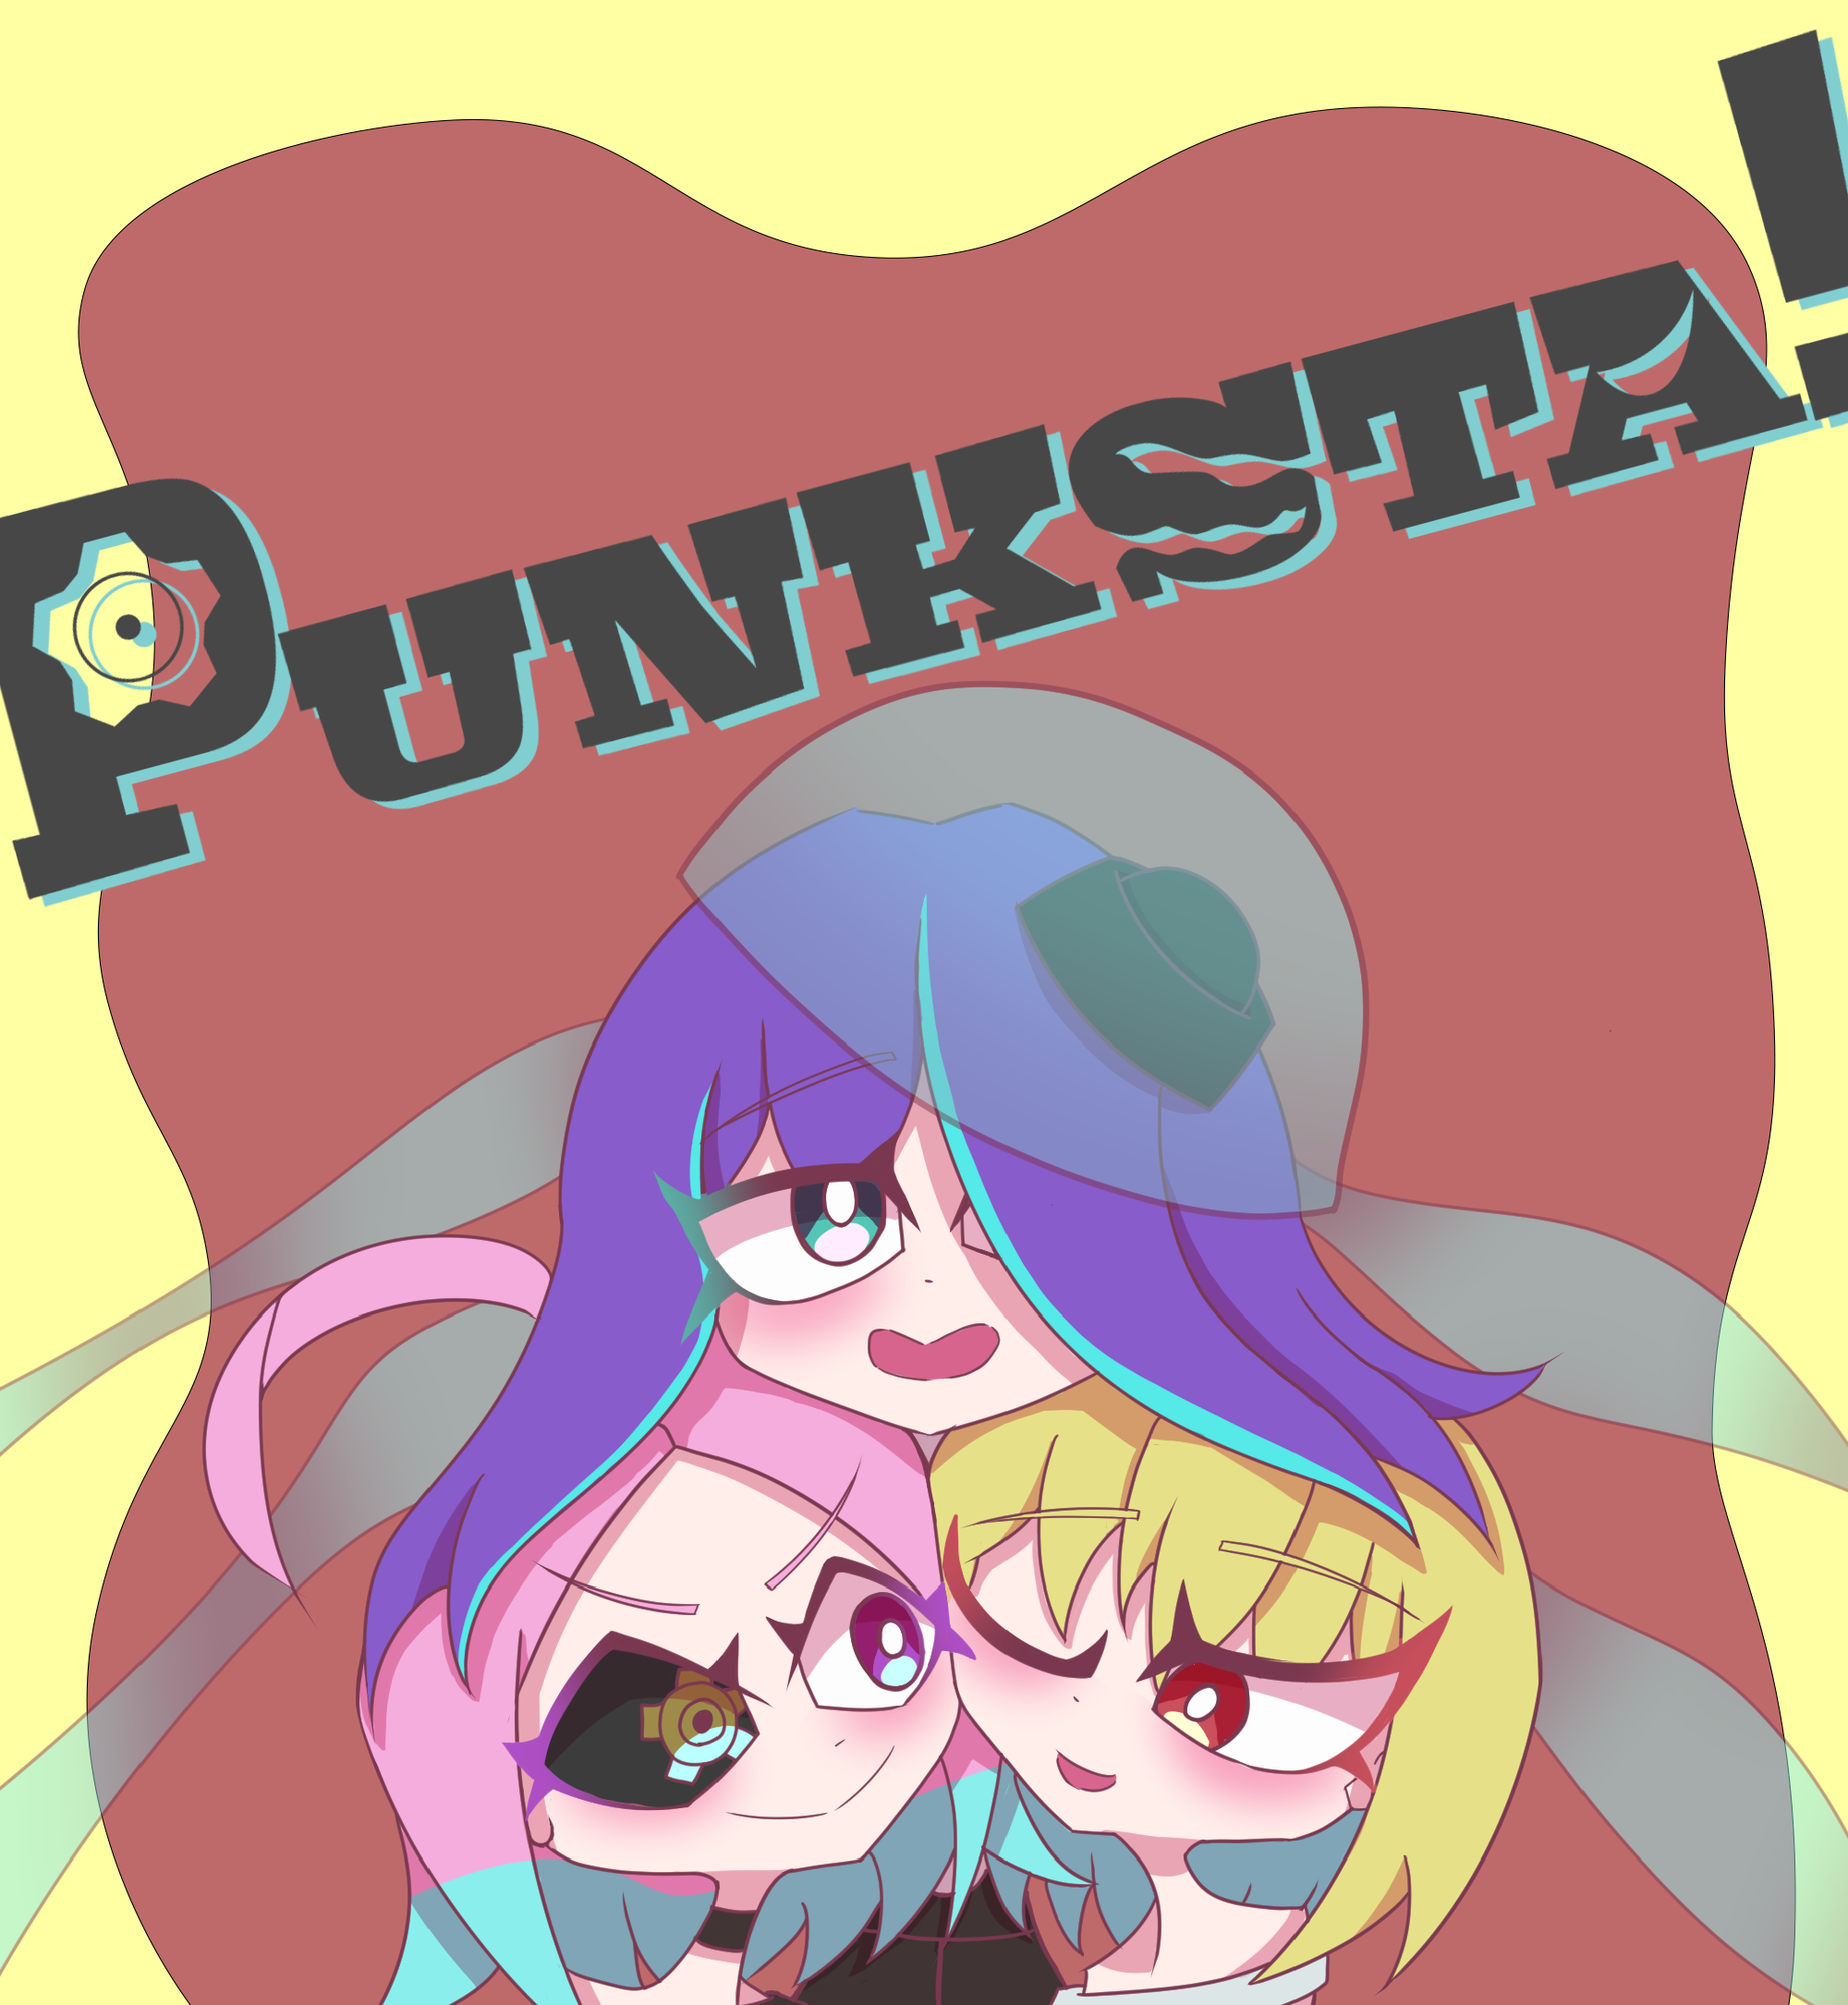 Punksta!